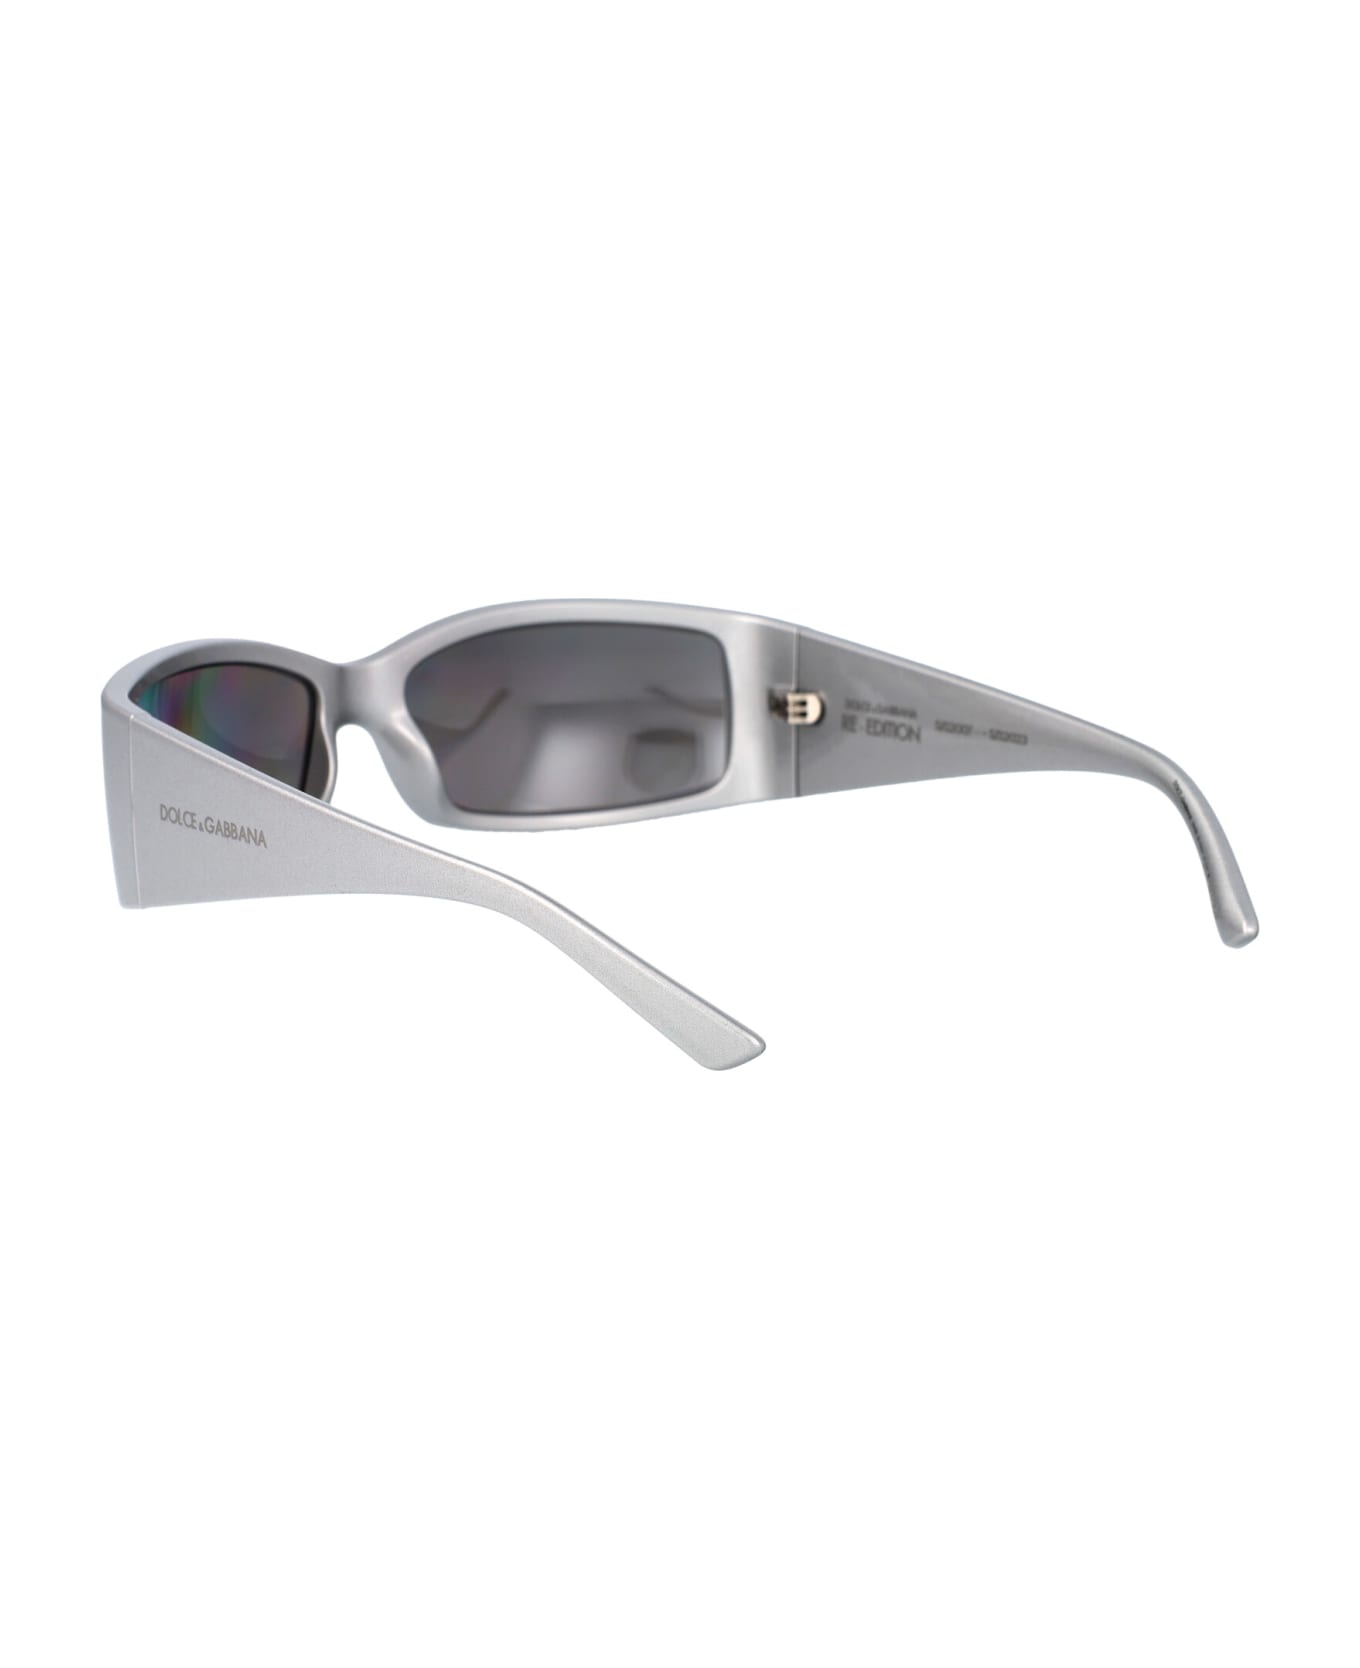 Dolce & Gabbana Eyewear 0dg6188 Sunglasses - 34156G Metallic Grey サングラス